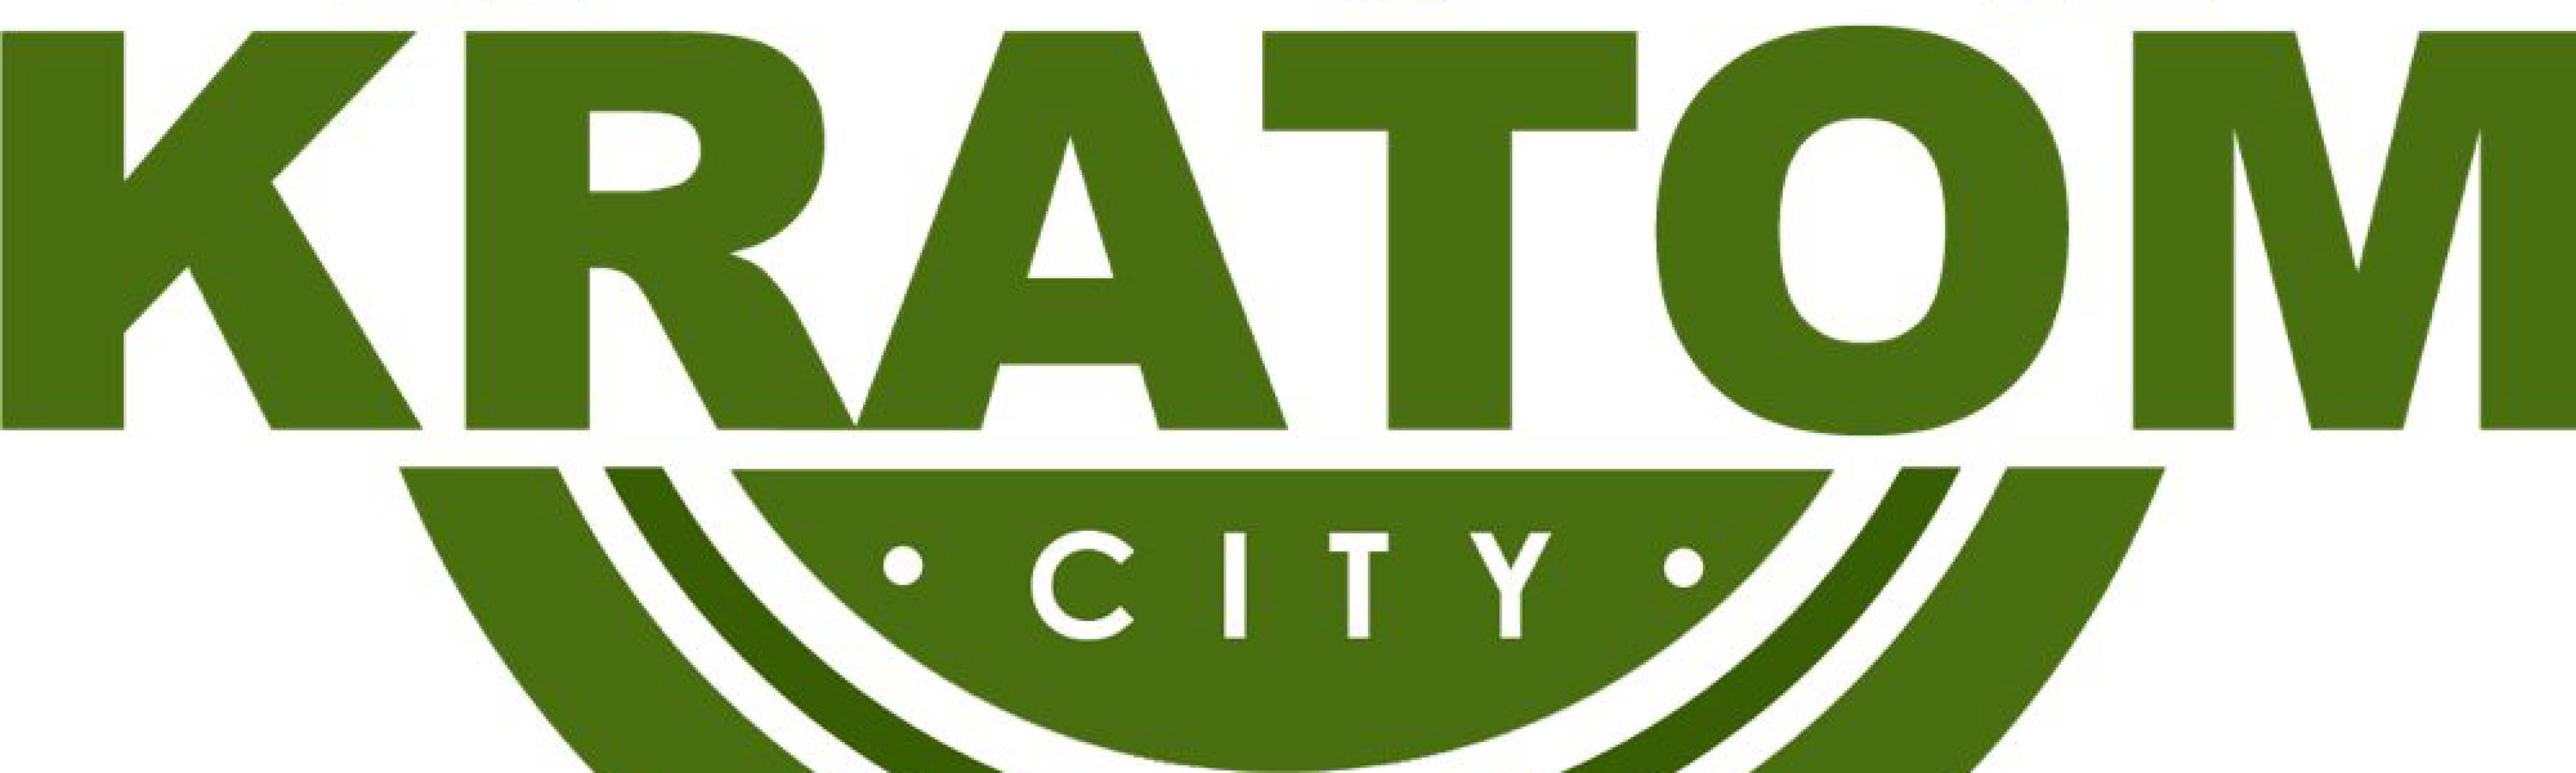 Kratom City logo